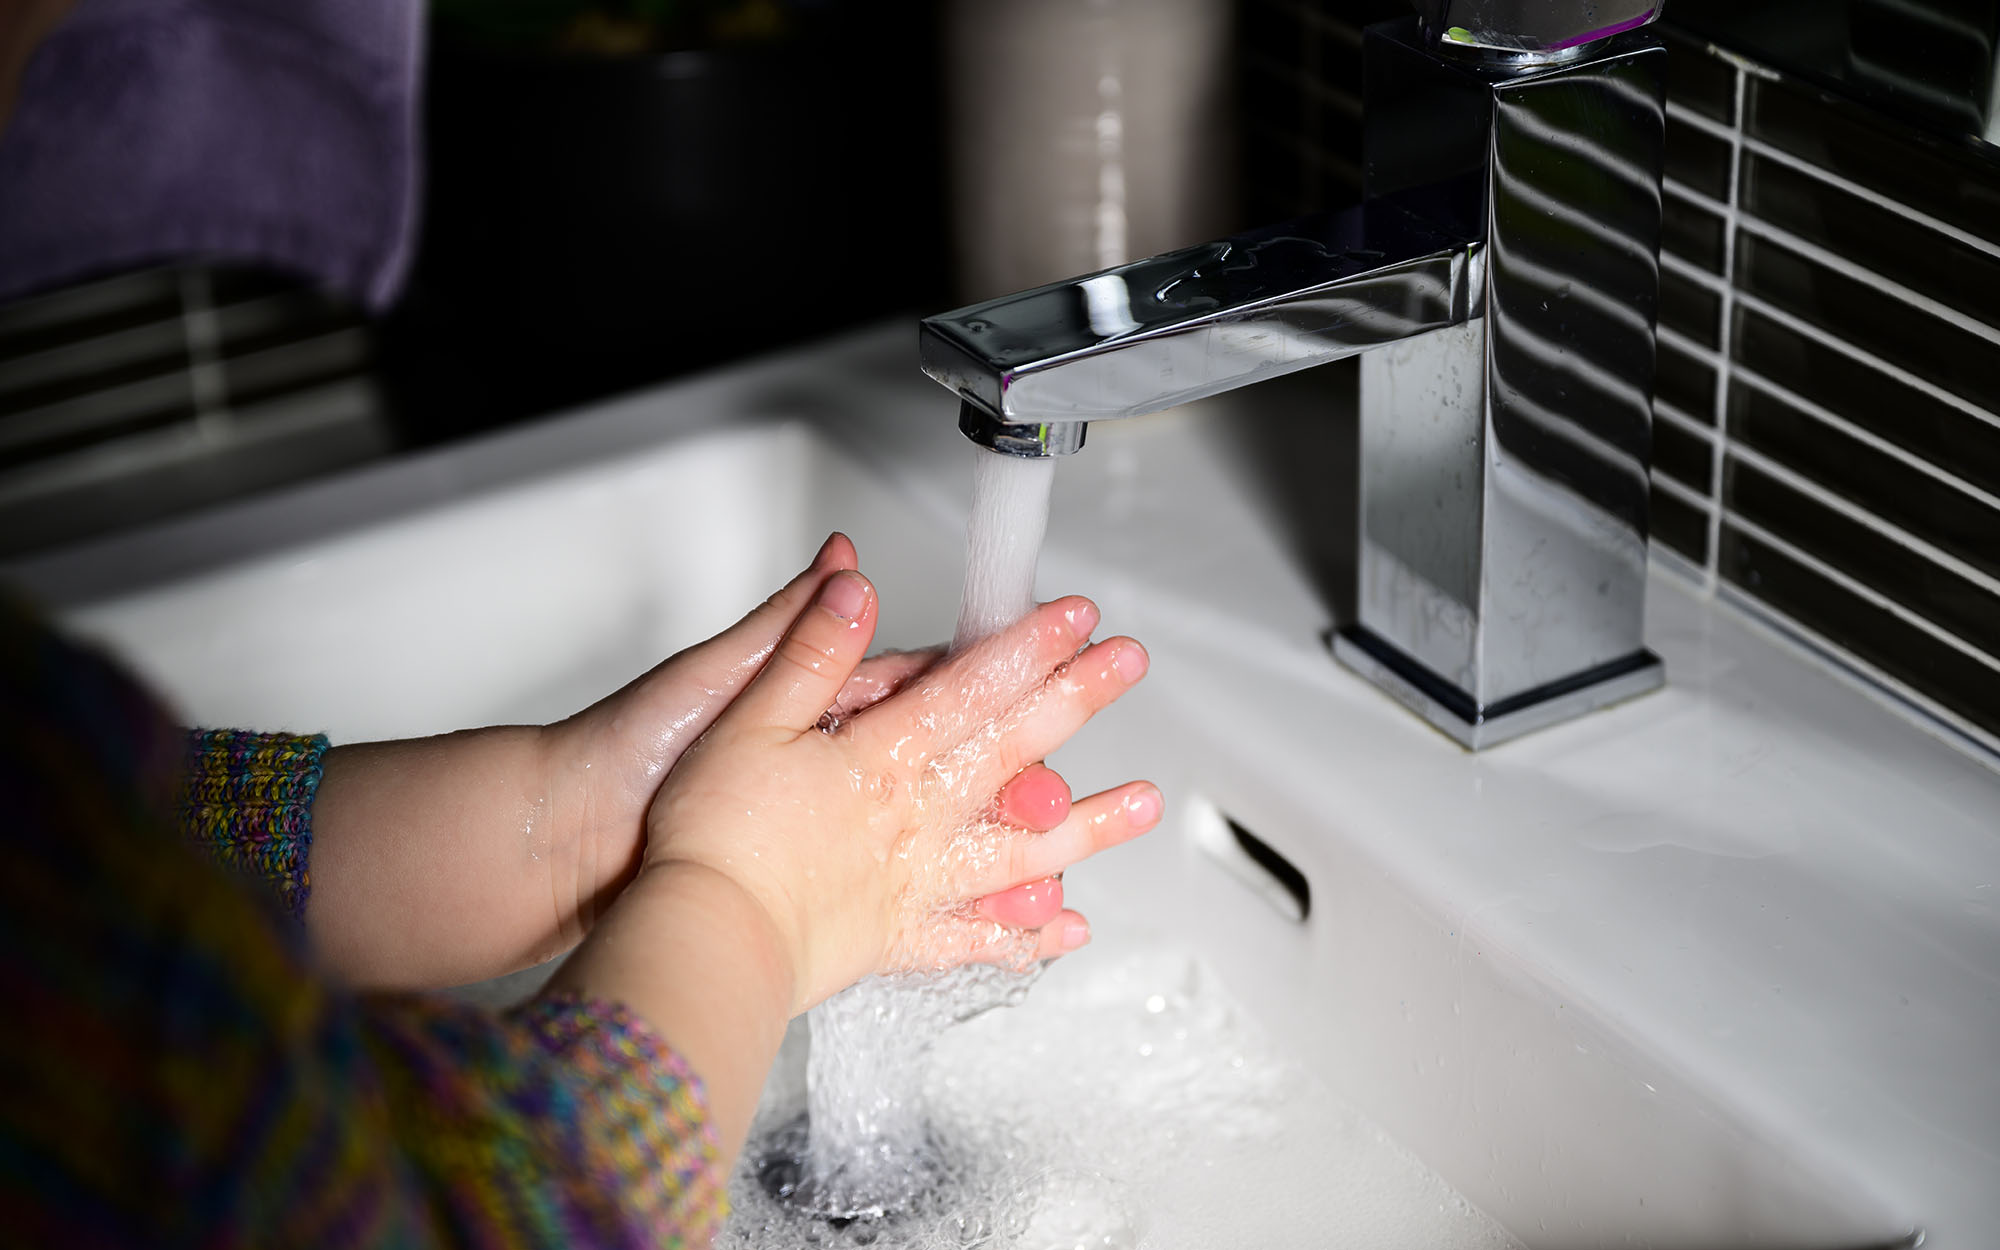 Girl washing hands - Image credit: Richard Bulley